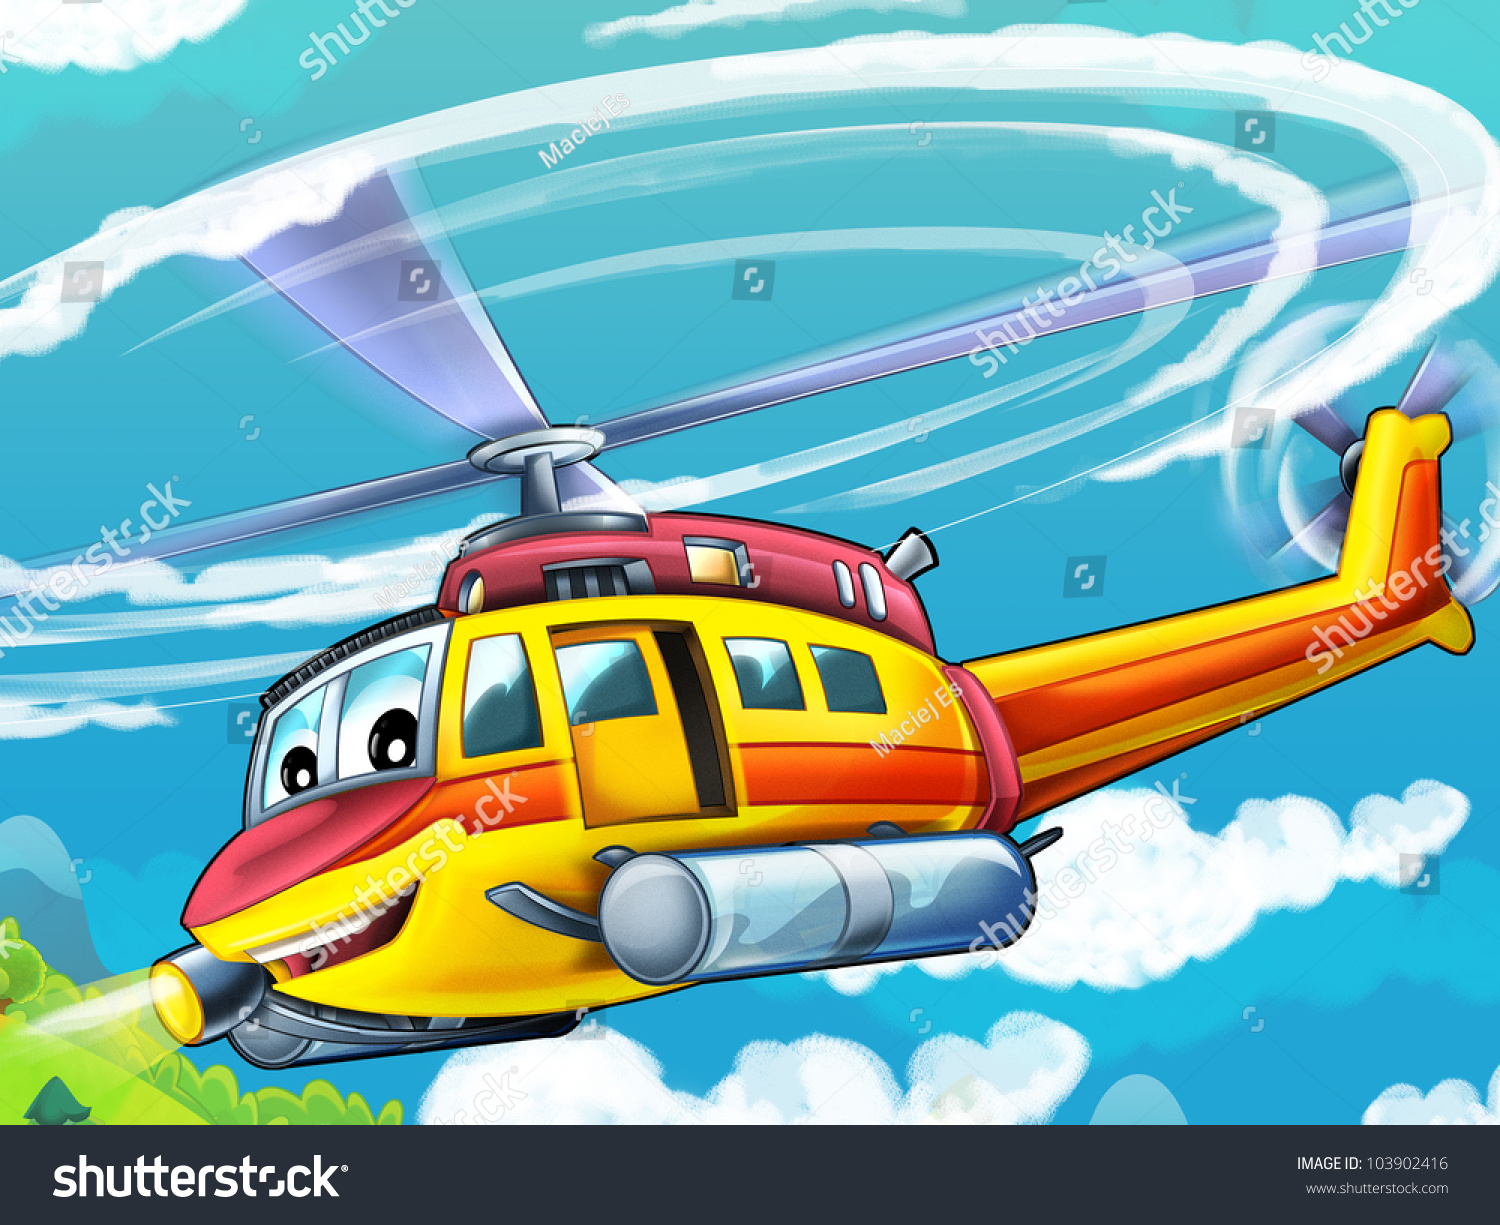 Cartoon Helicopter 2 Stock Illustration 103902416 - Shutterstock